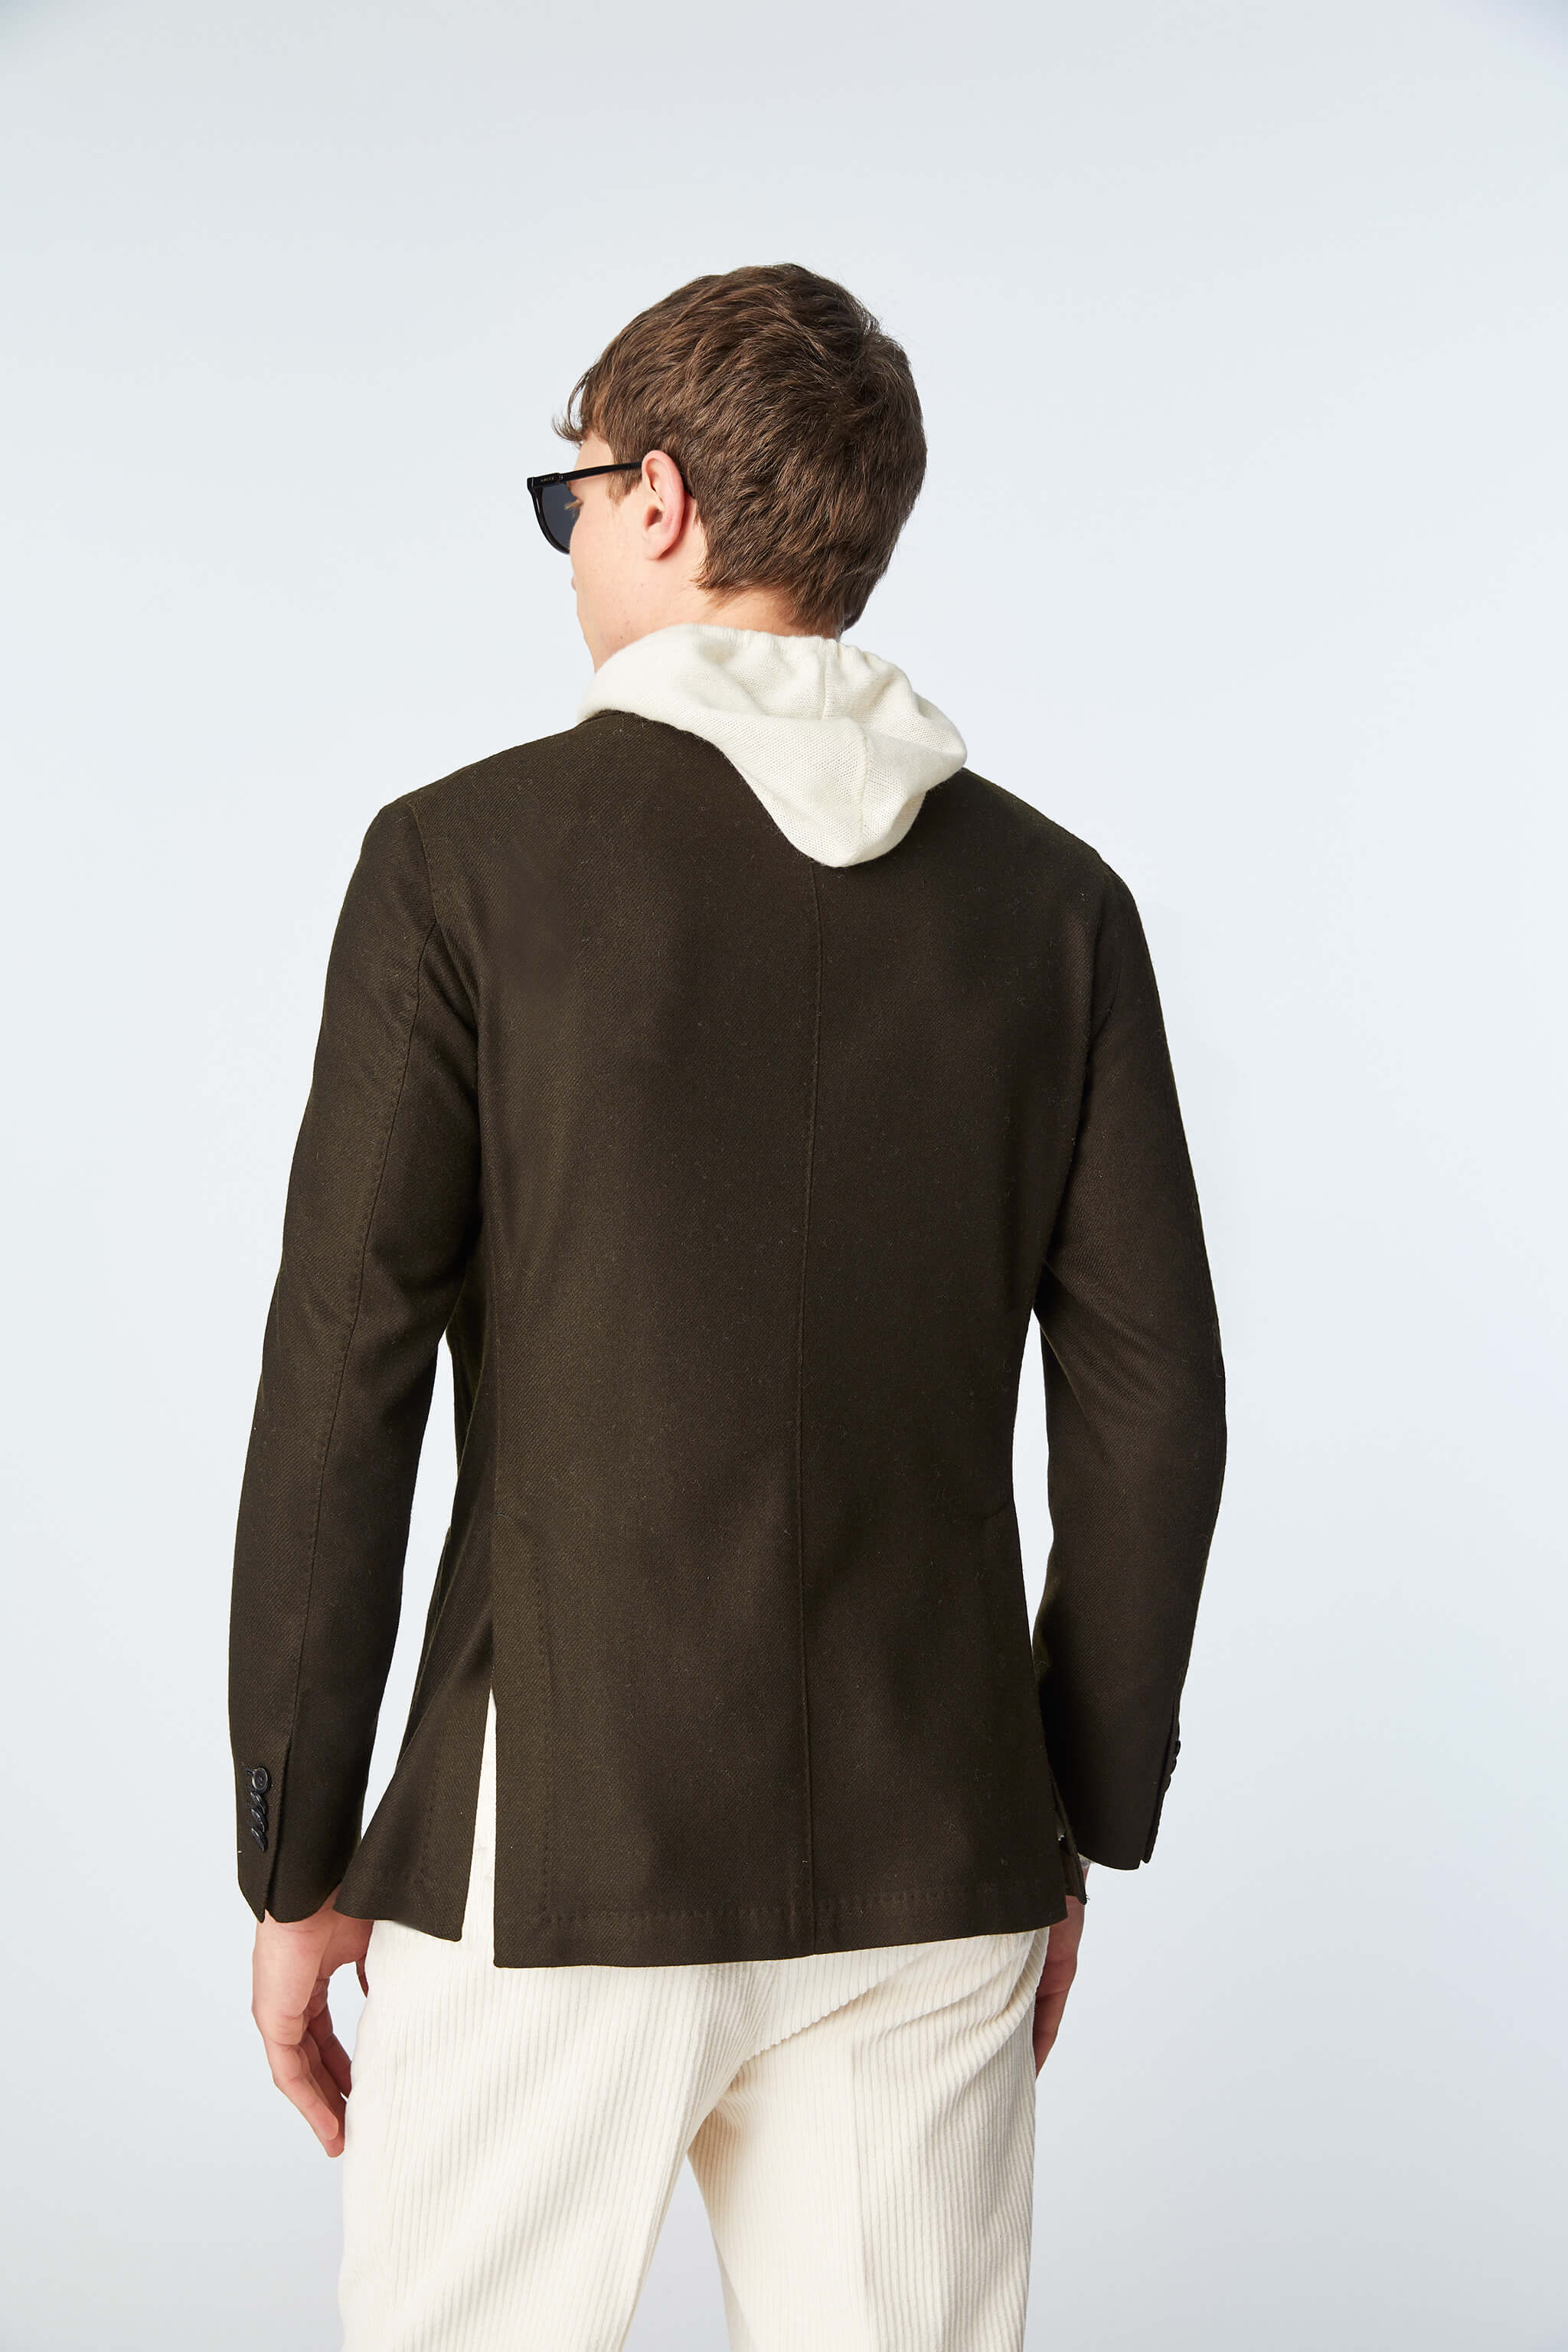 Garment-dyed JACK jacket in brown